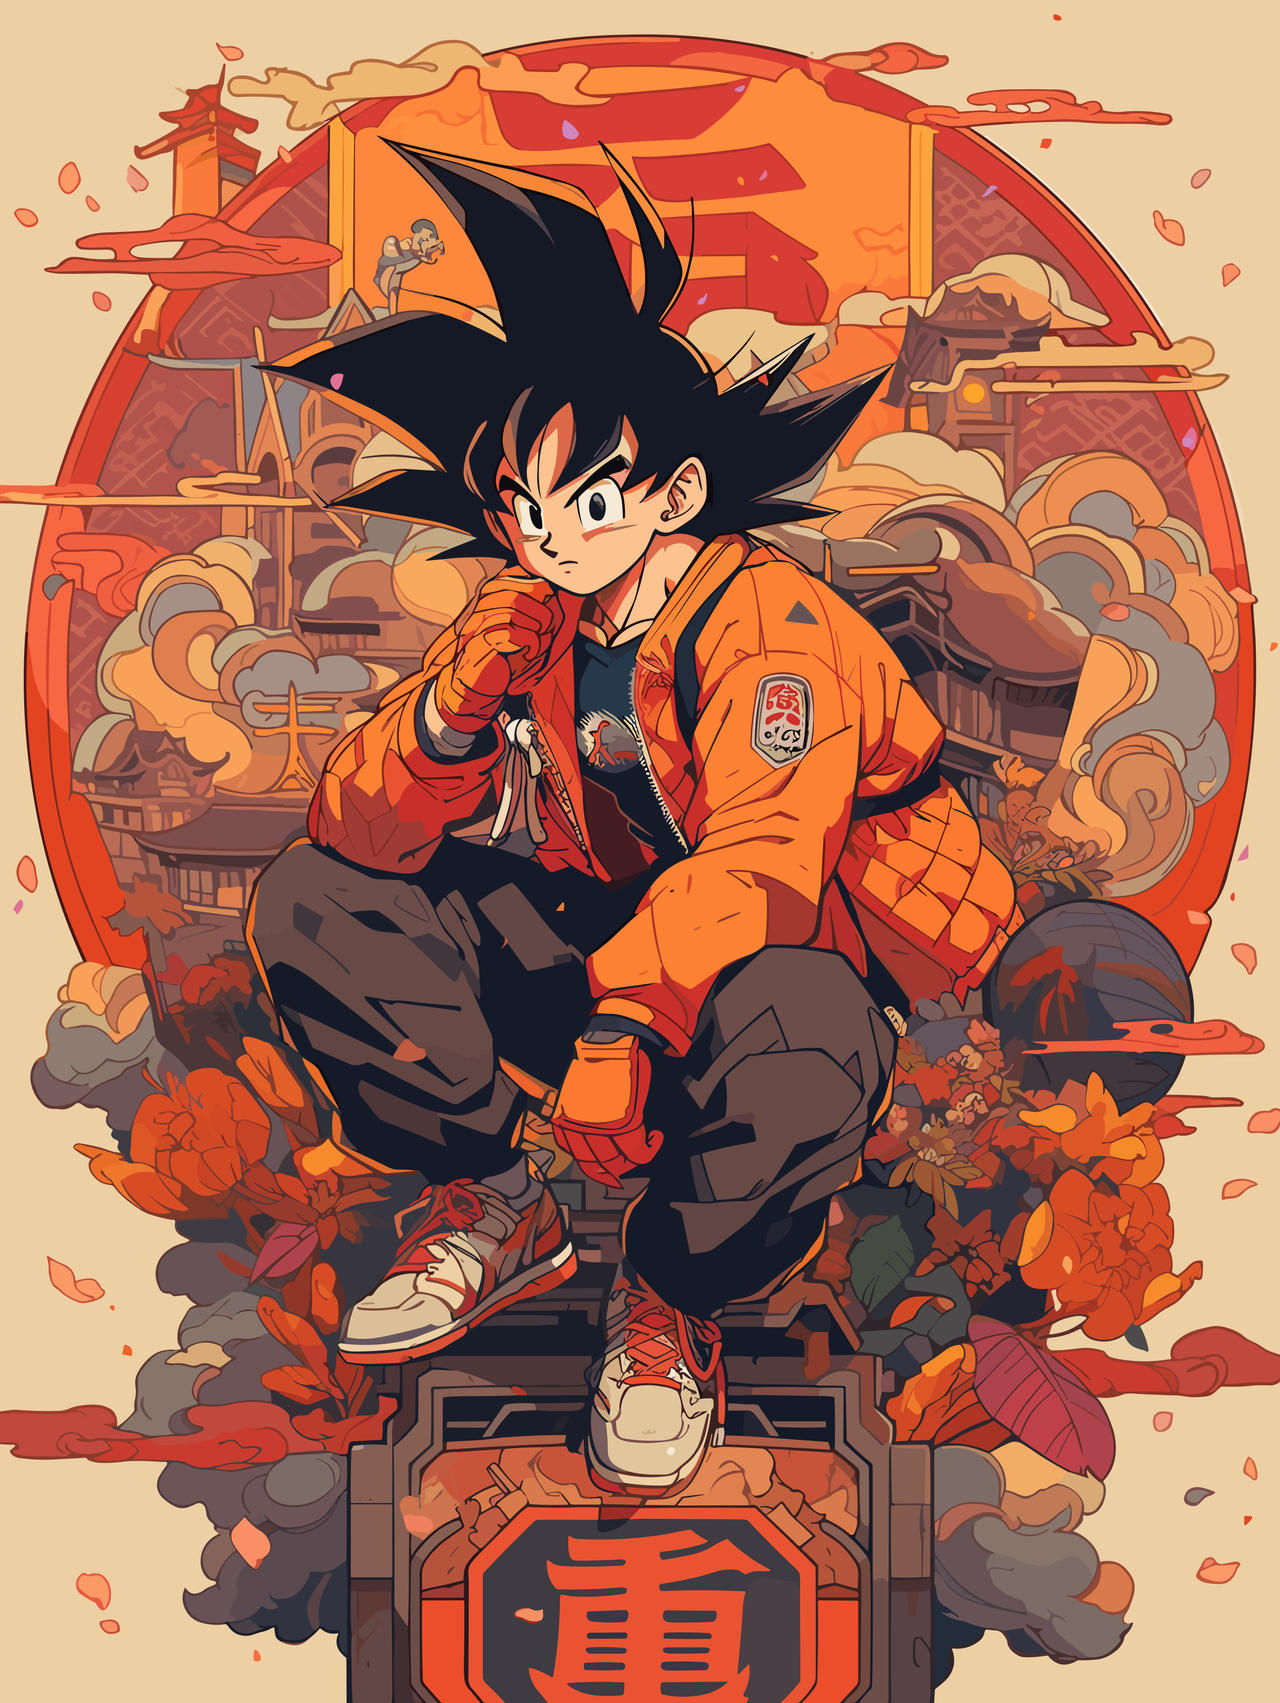 Goku Dragon Ball Z Anime Manga (32) by C4Dart on DeviantArt